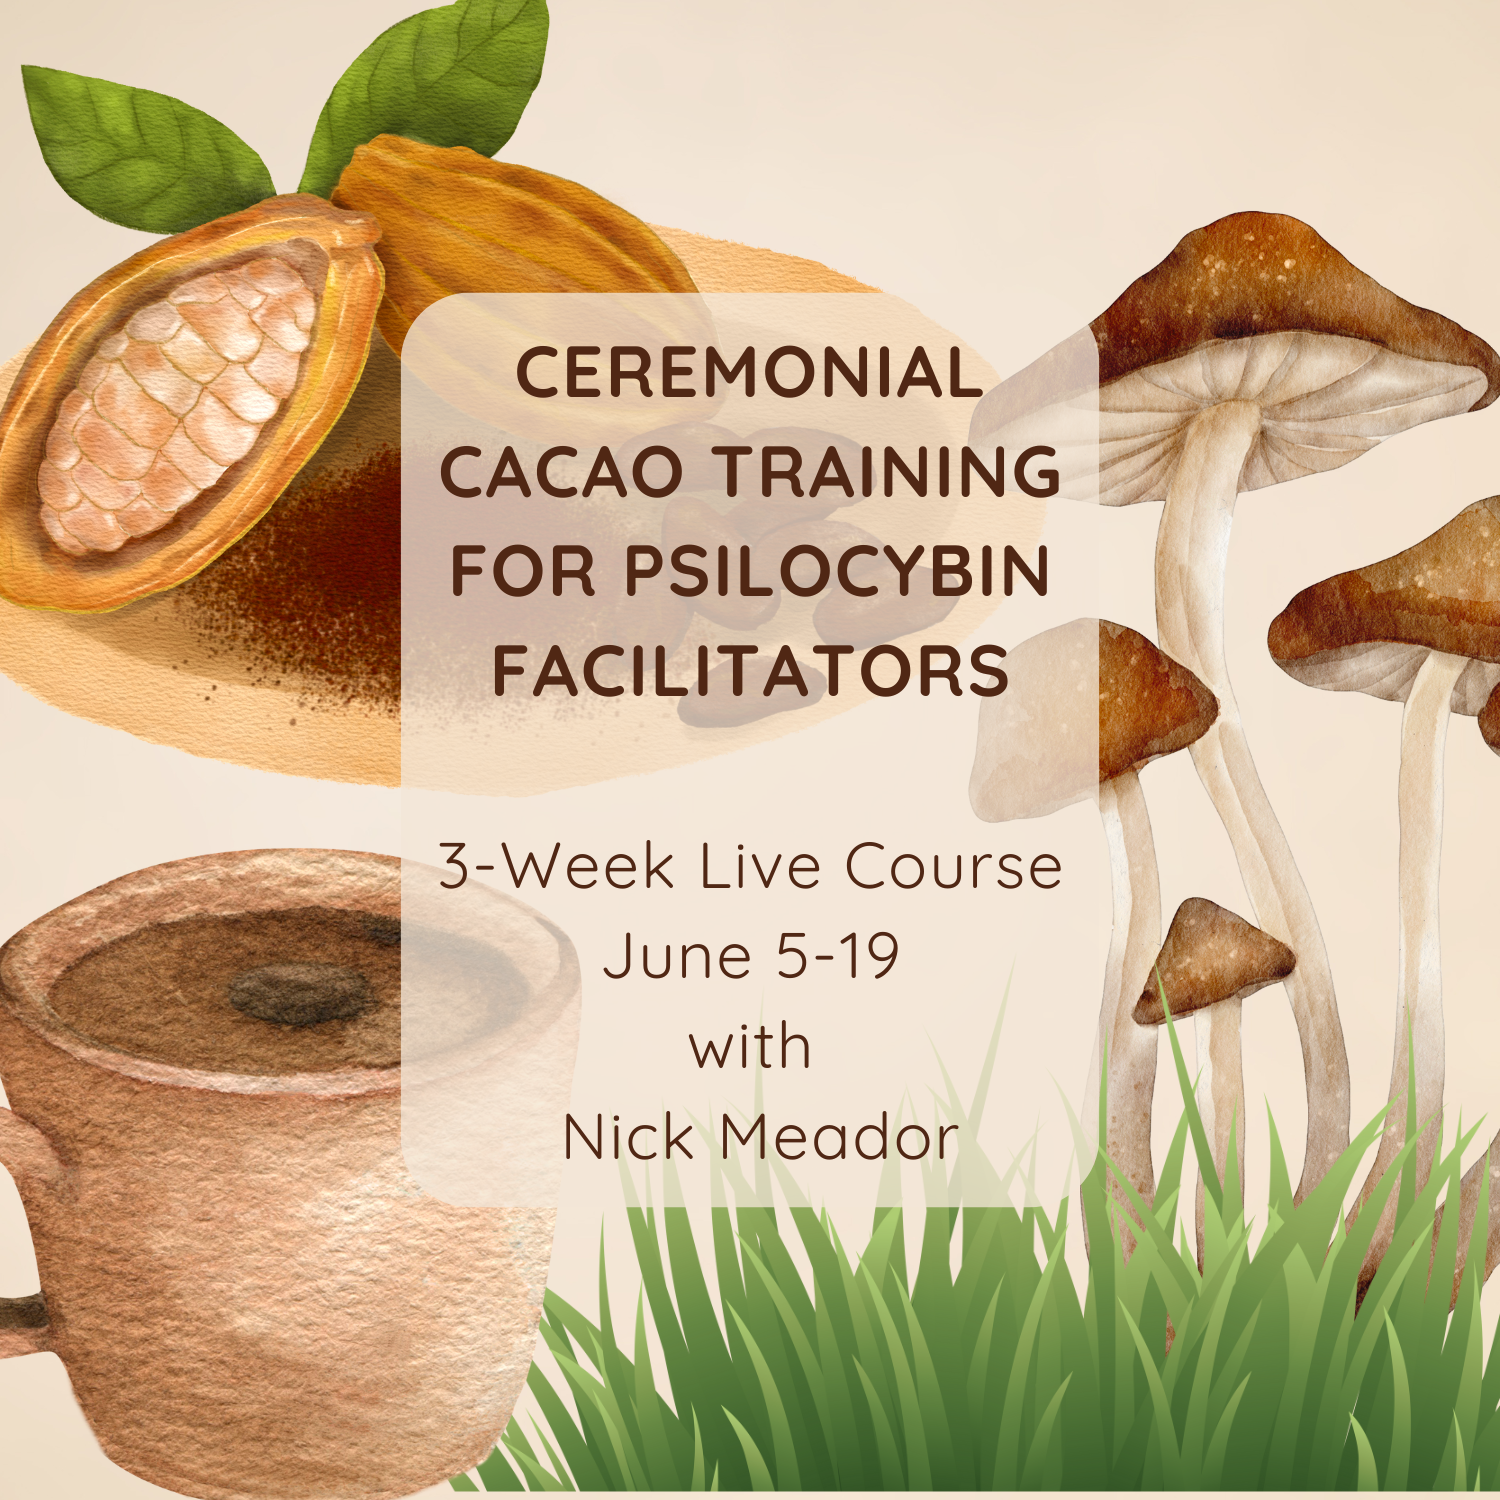 Ceremonial Cacao Training for Psilocybin Facilitators